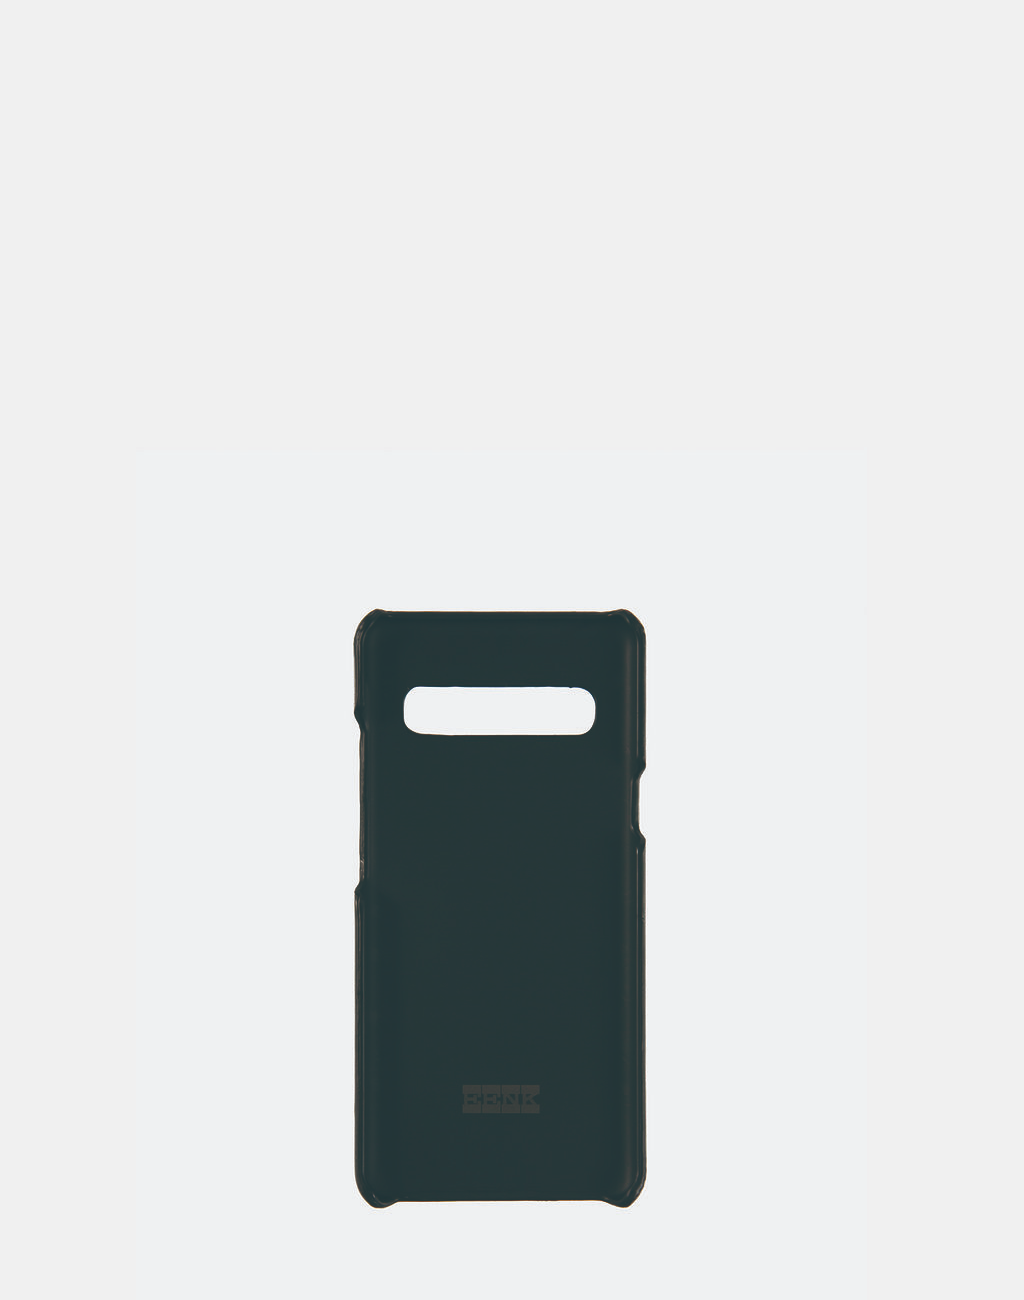 GALAXY S10 5G Case (Color Choice)